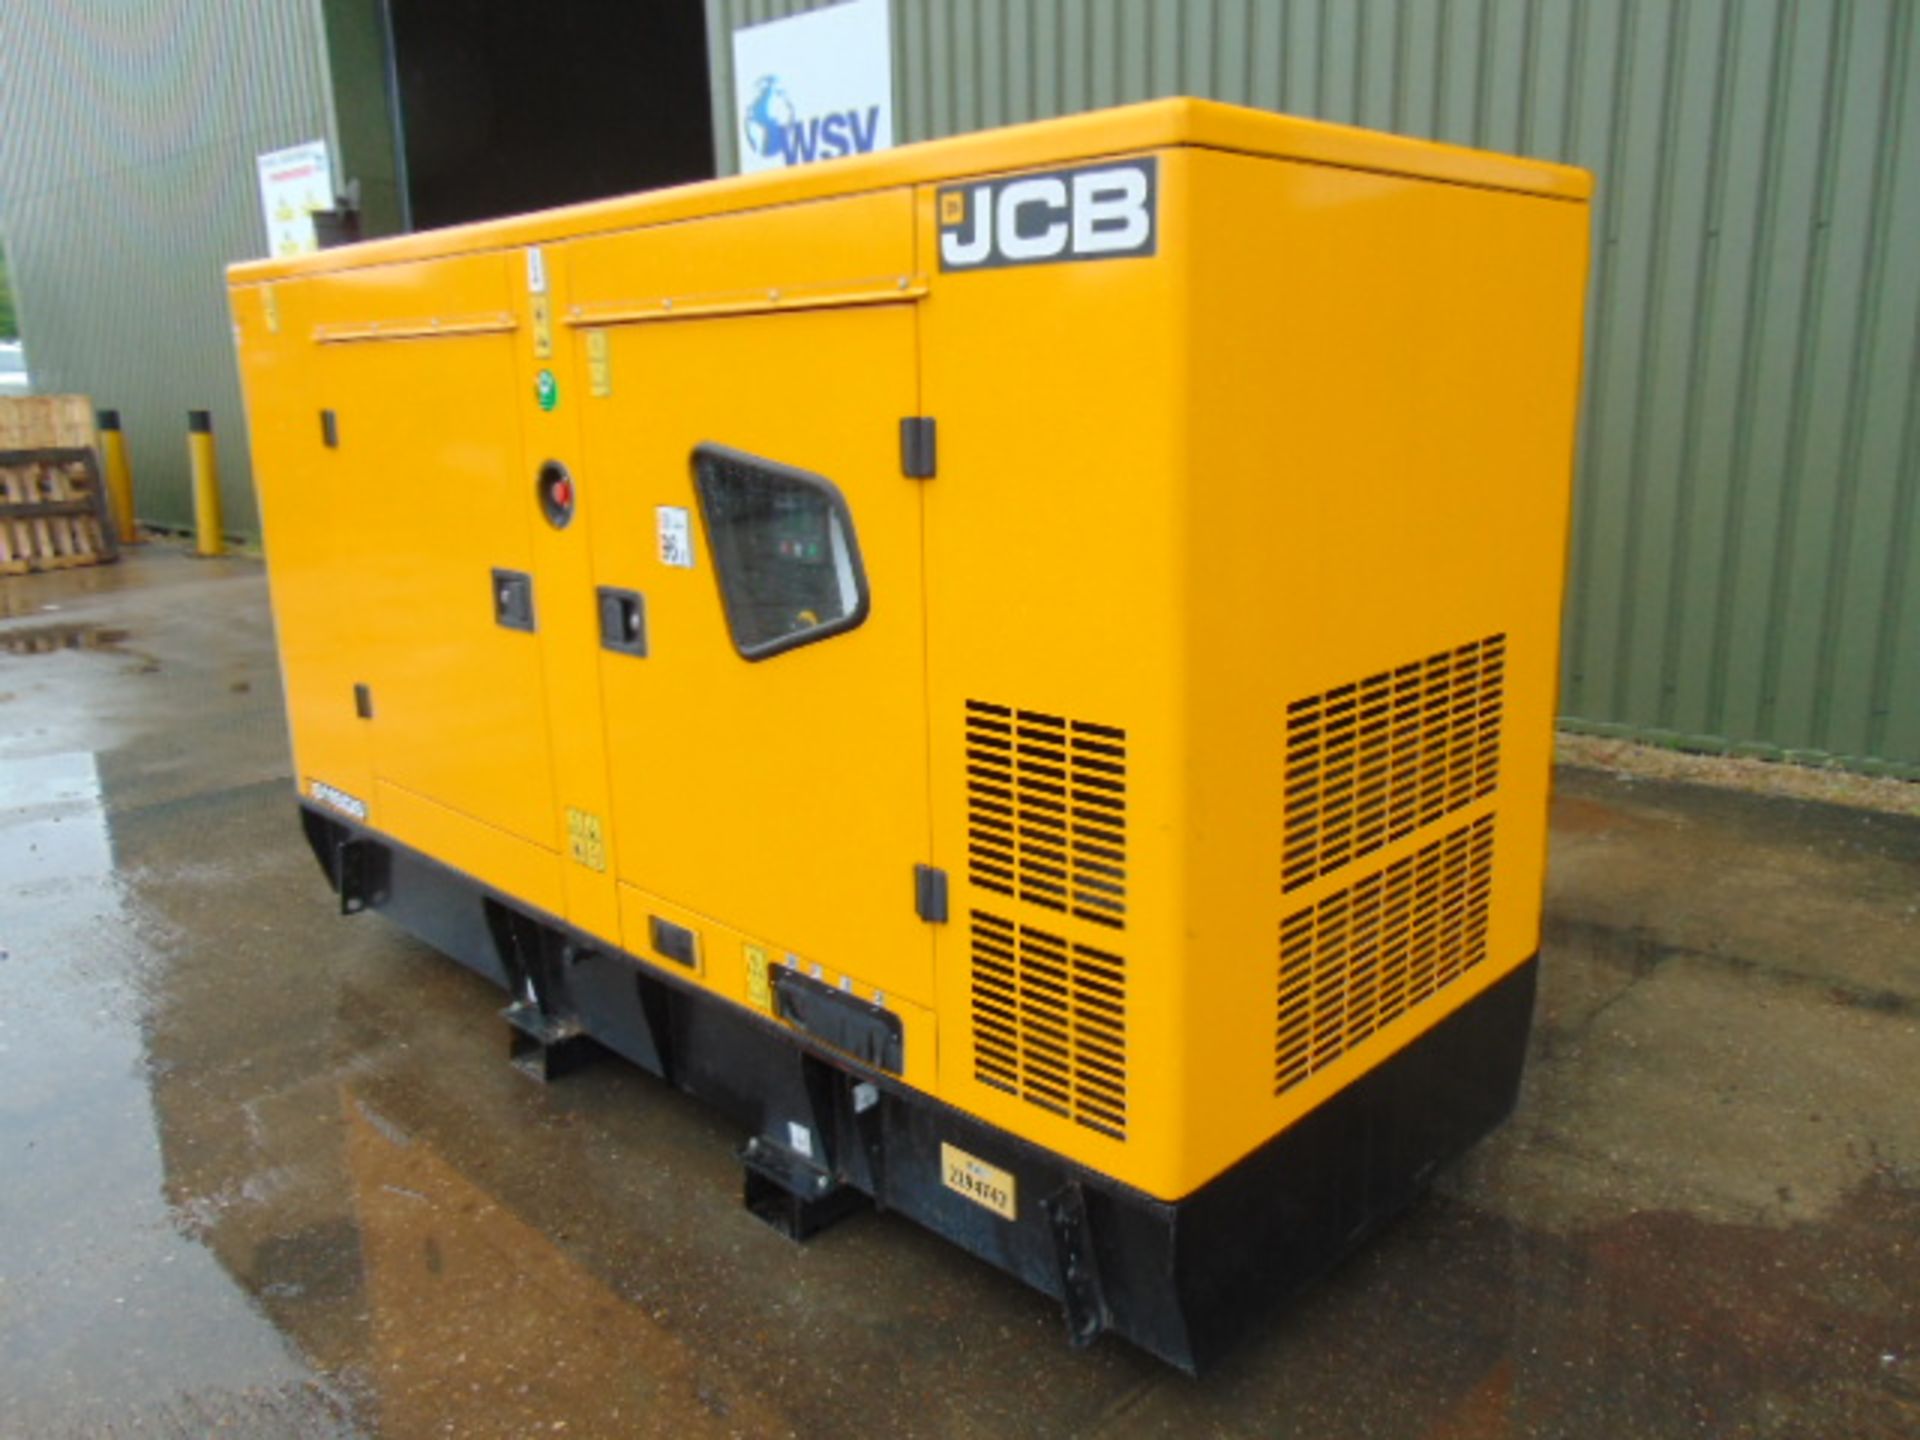 2019 UNISSUED JCB G115QS 110 KVA 3 Phase Silent Diesel Generator Set - Image 6 of 17